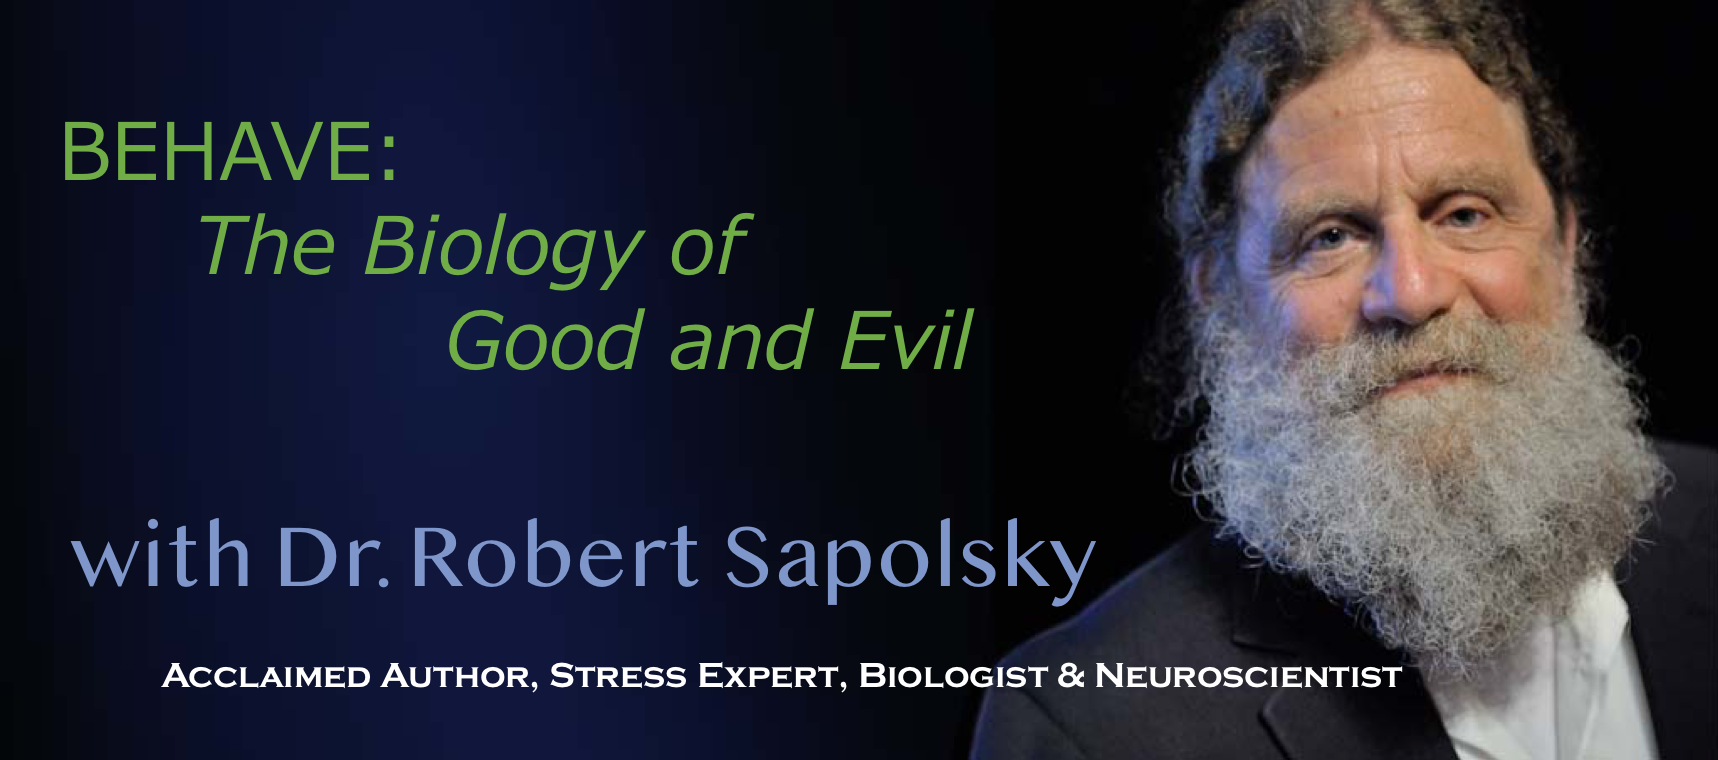 Dr. Robert Sapolsky